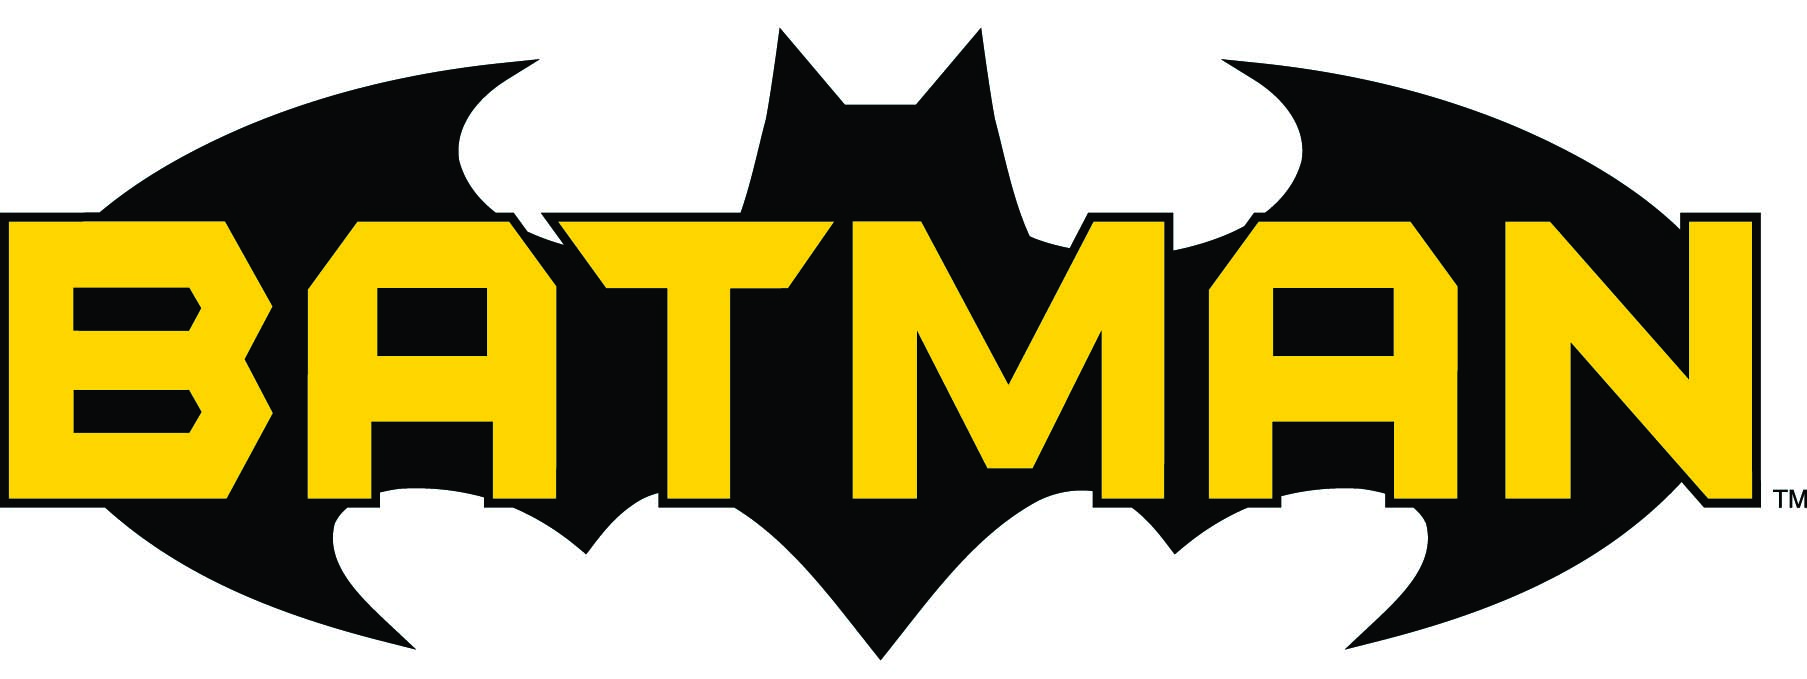 BATMAN-logo